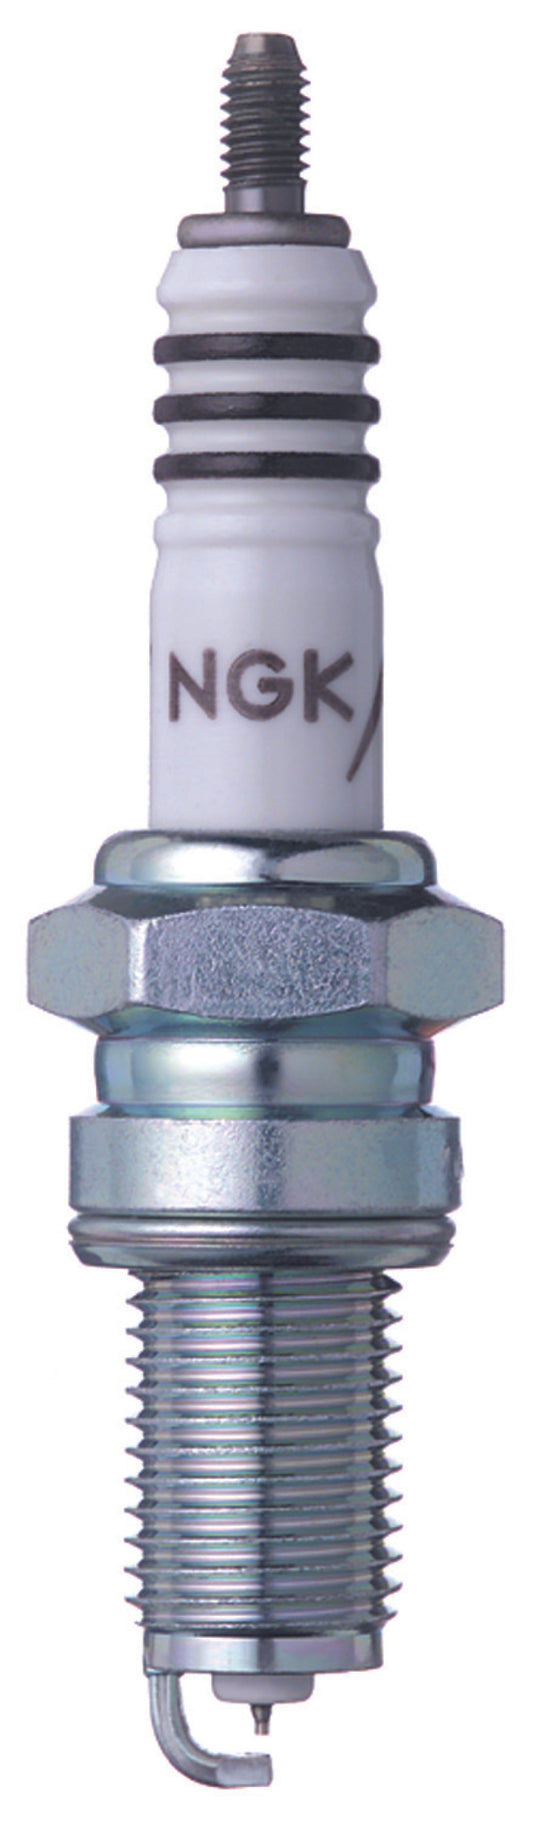 NGK Iridium IX Spark Plug Box of 4 (DPR9EIX-9)